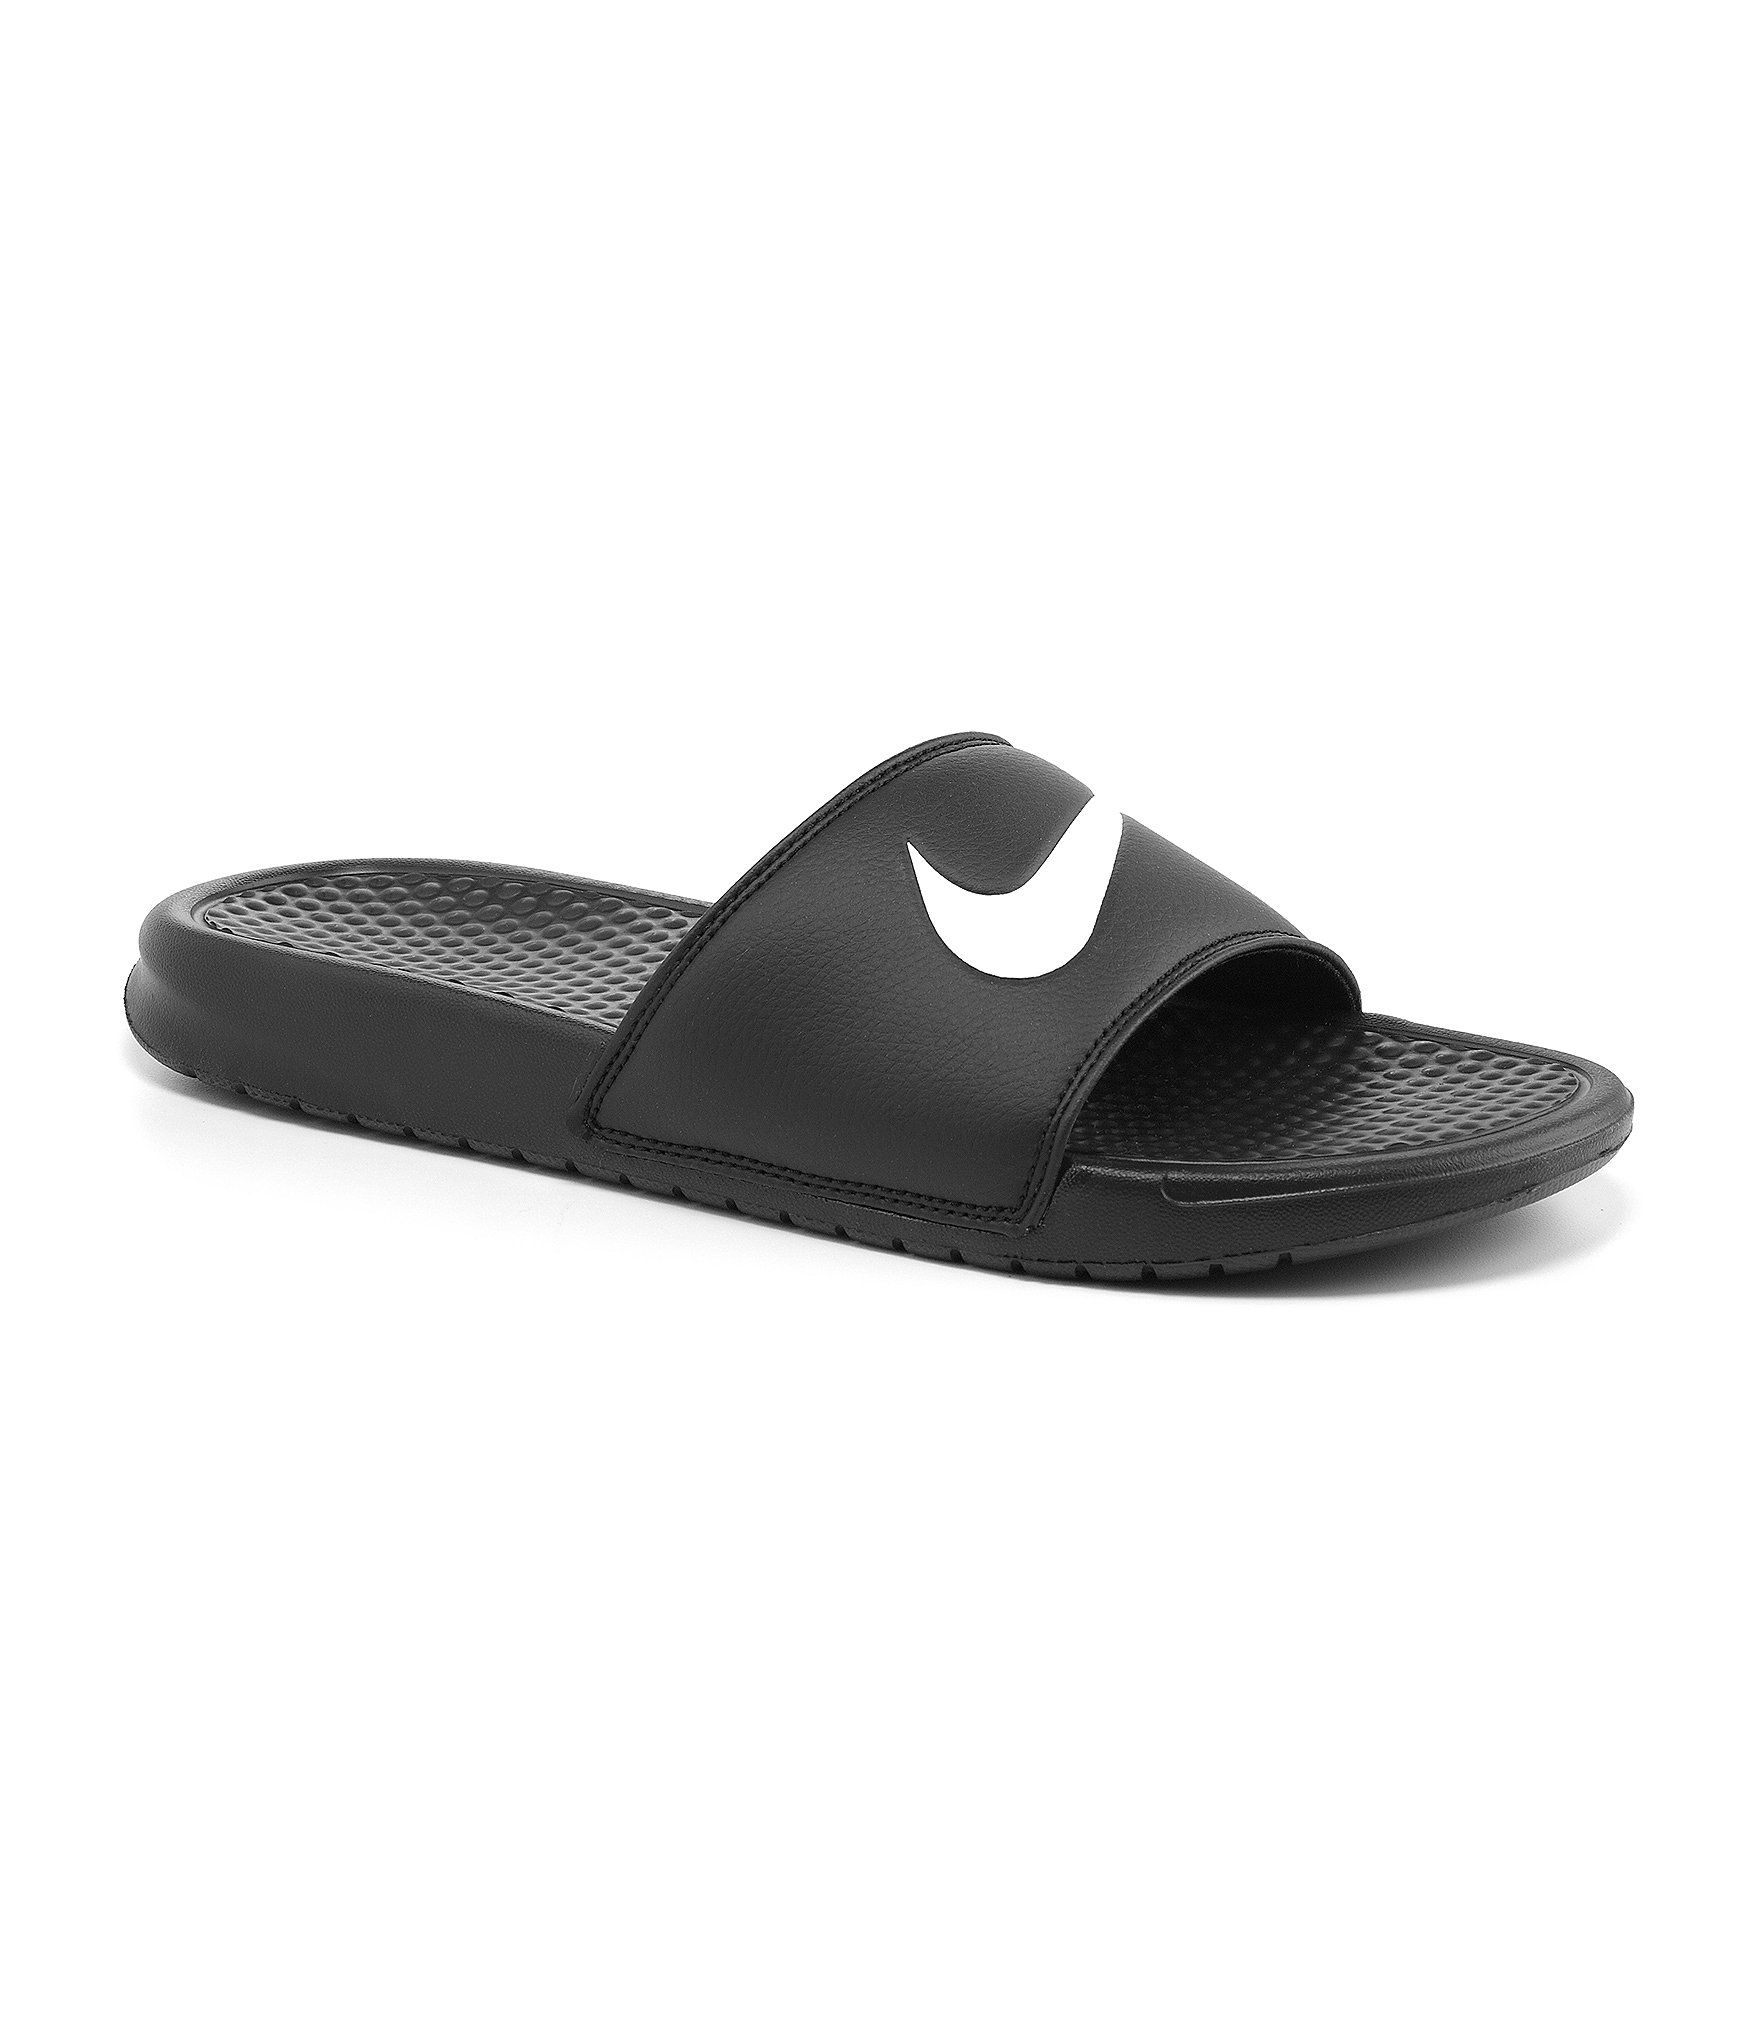 Lyst - Nike Benassi Swoosh Sandals in Black for Men